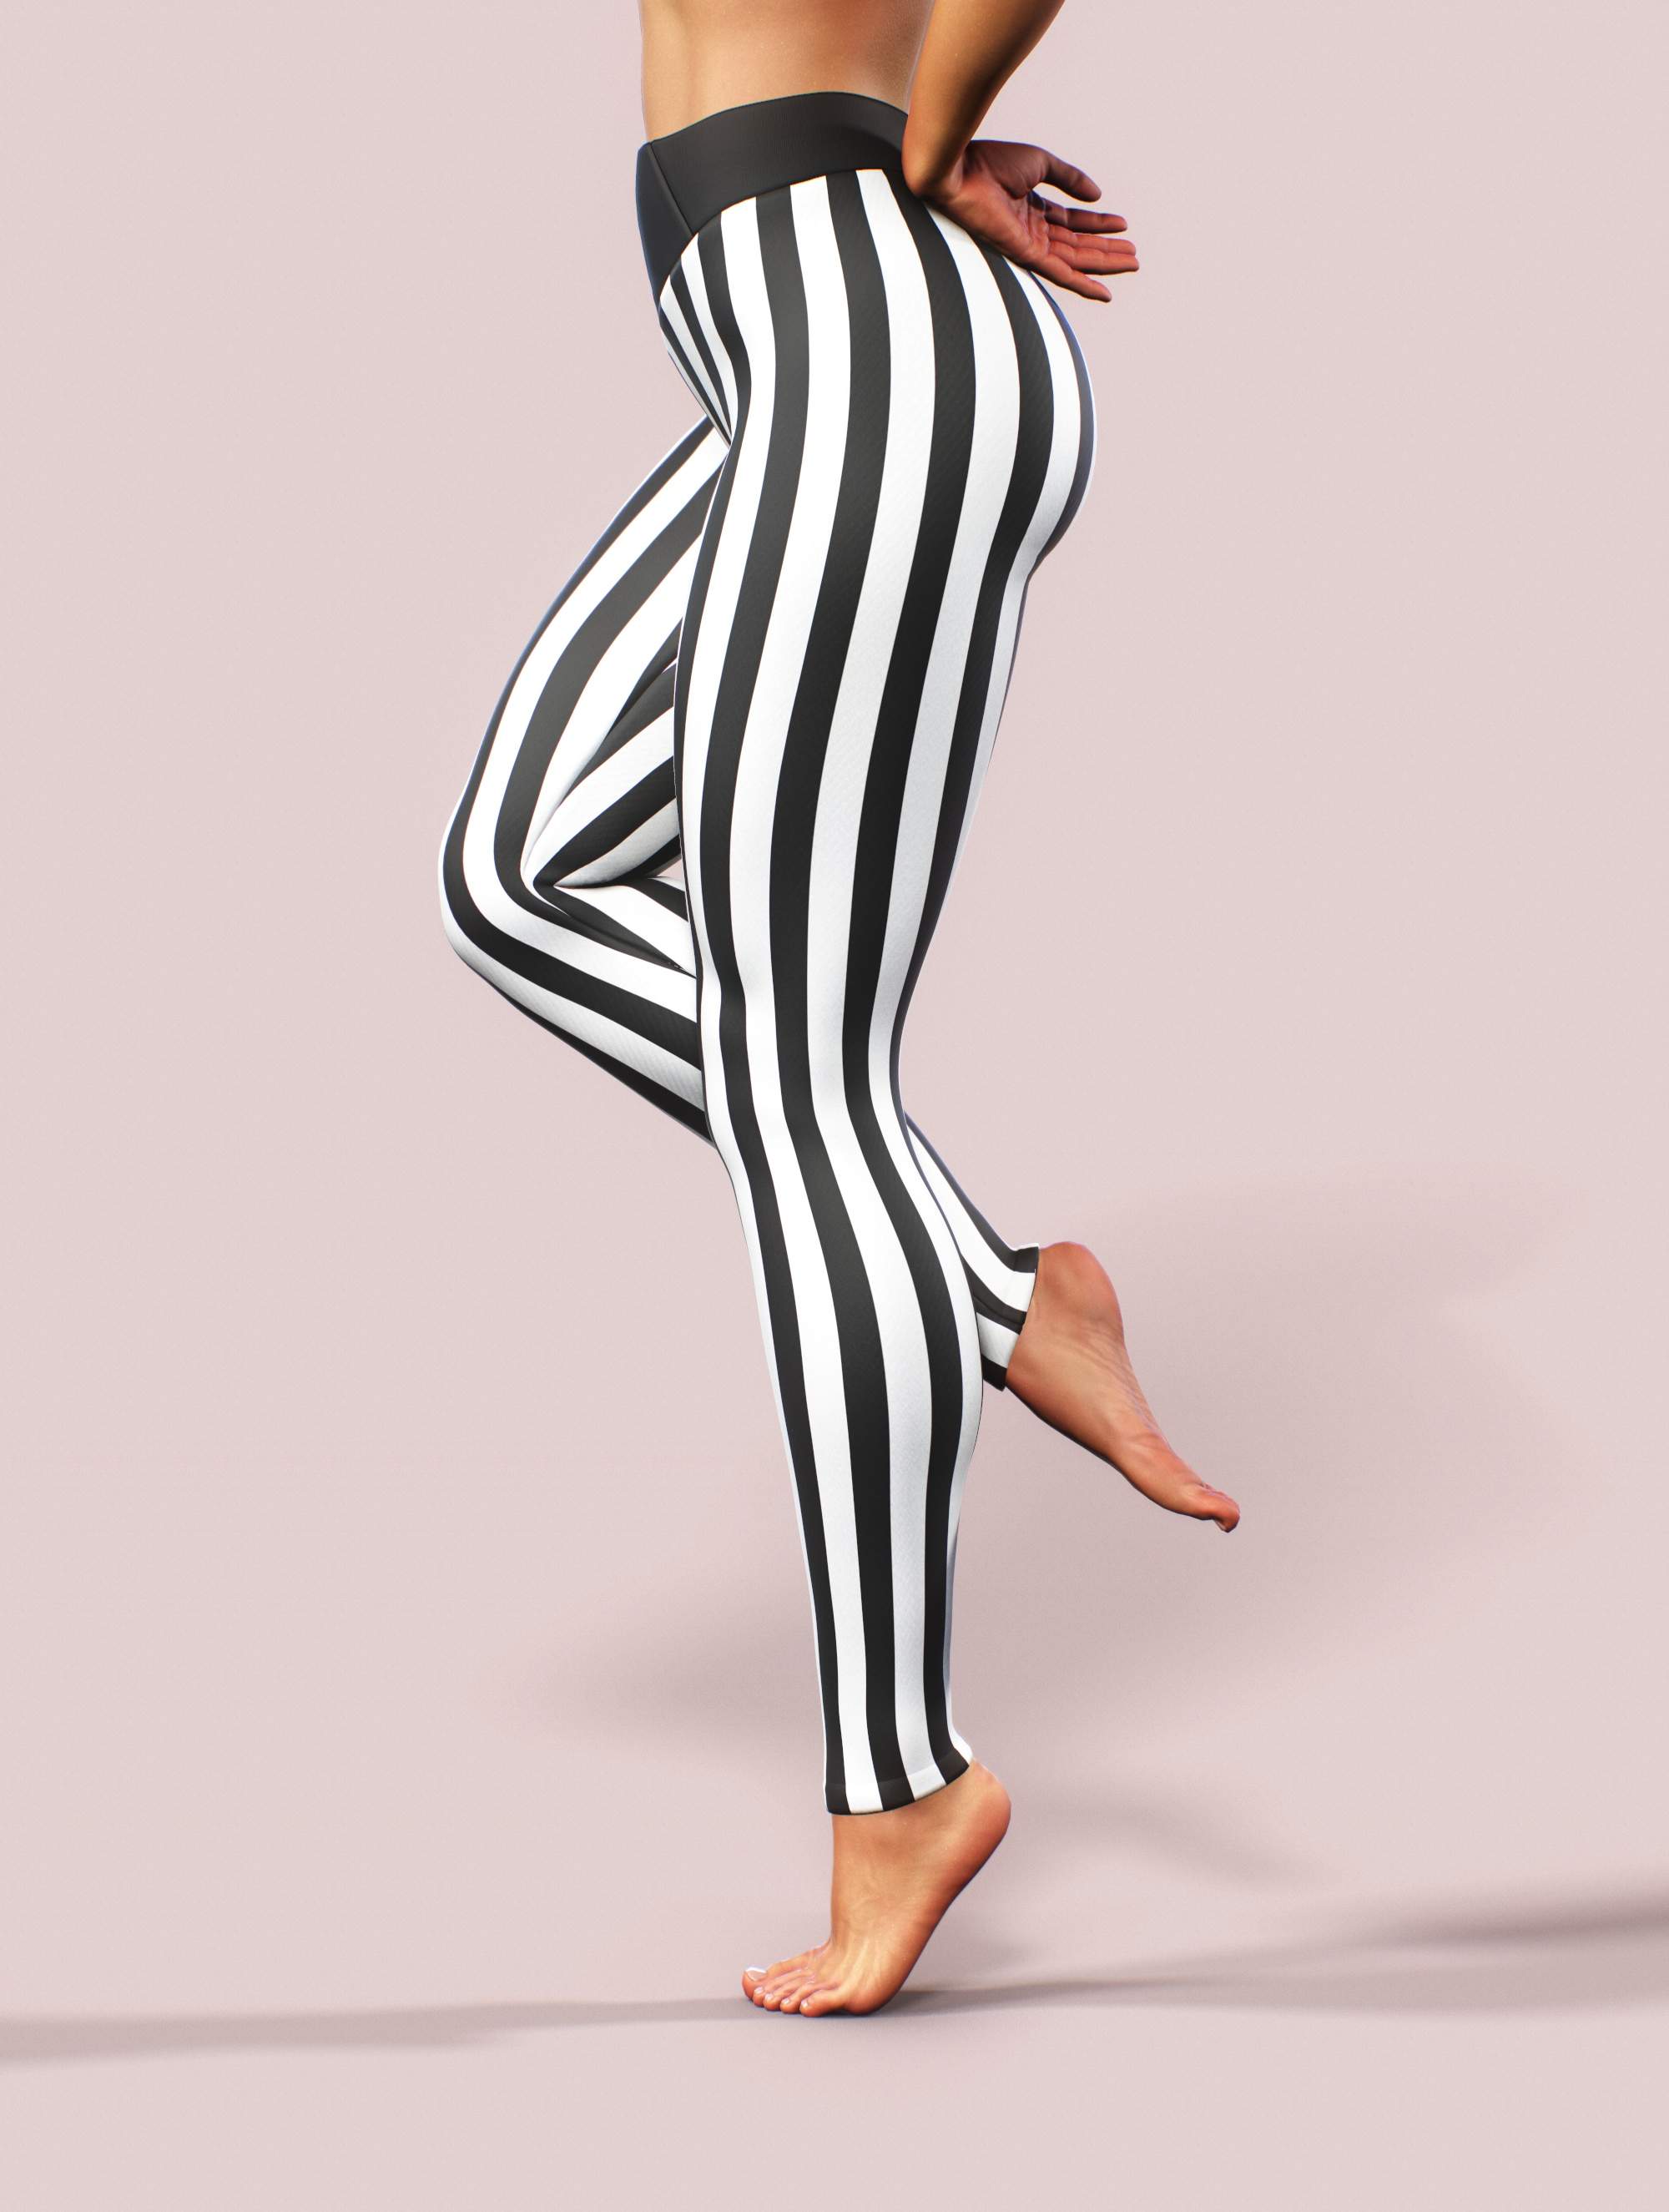 Pants: black and white striped yoga yoga workout leggings